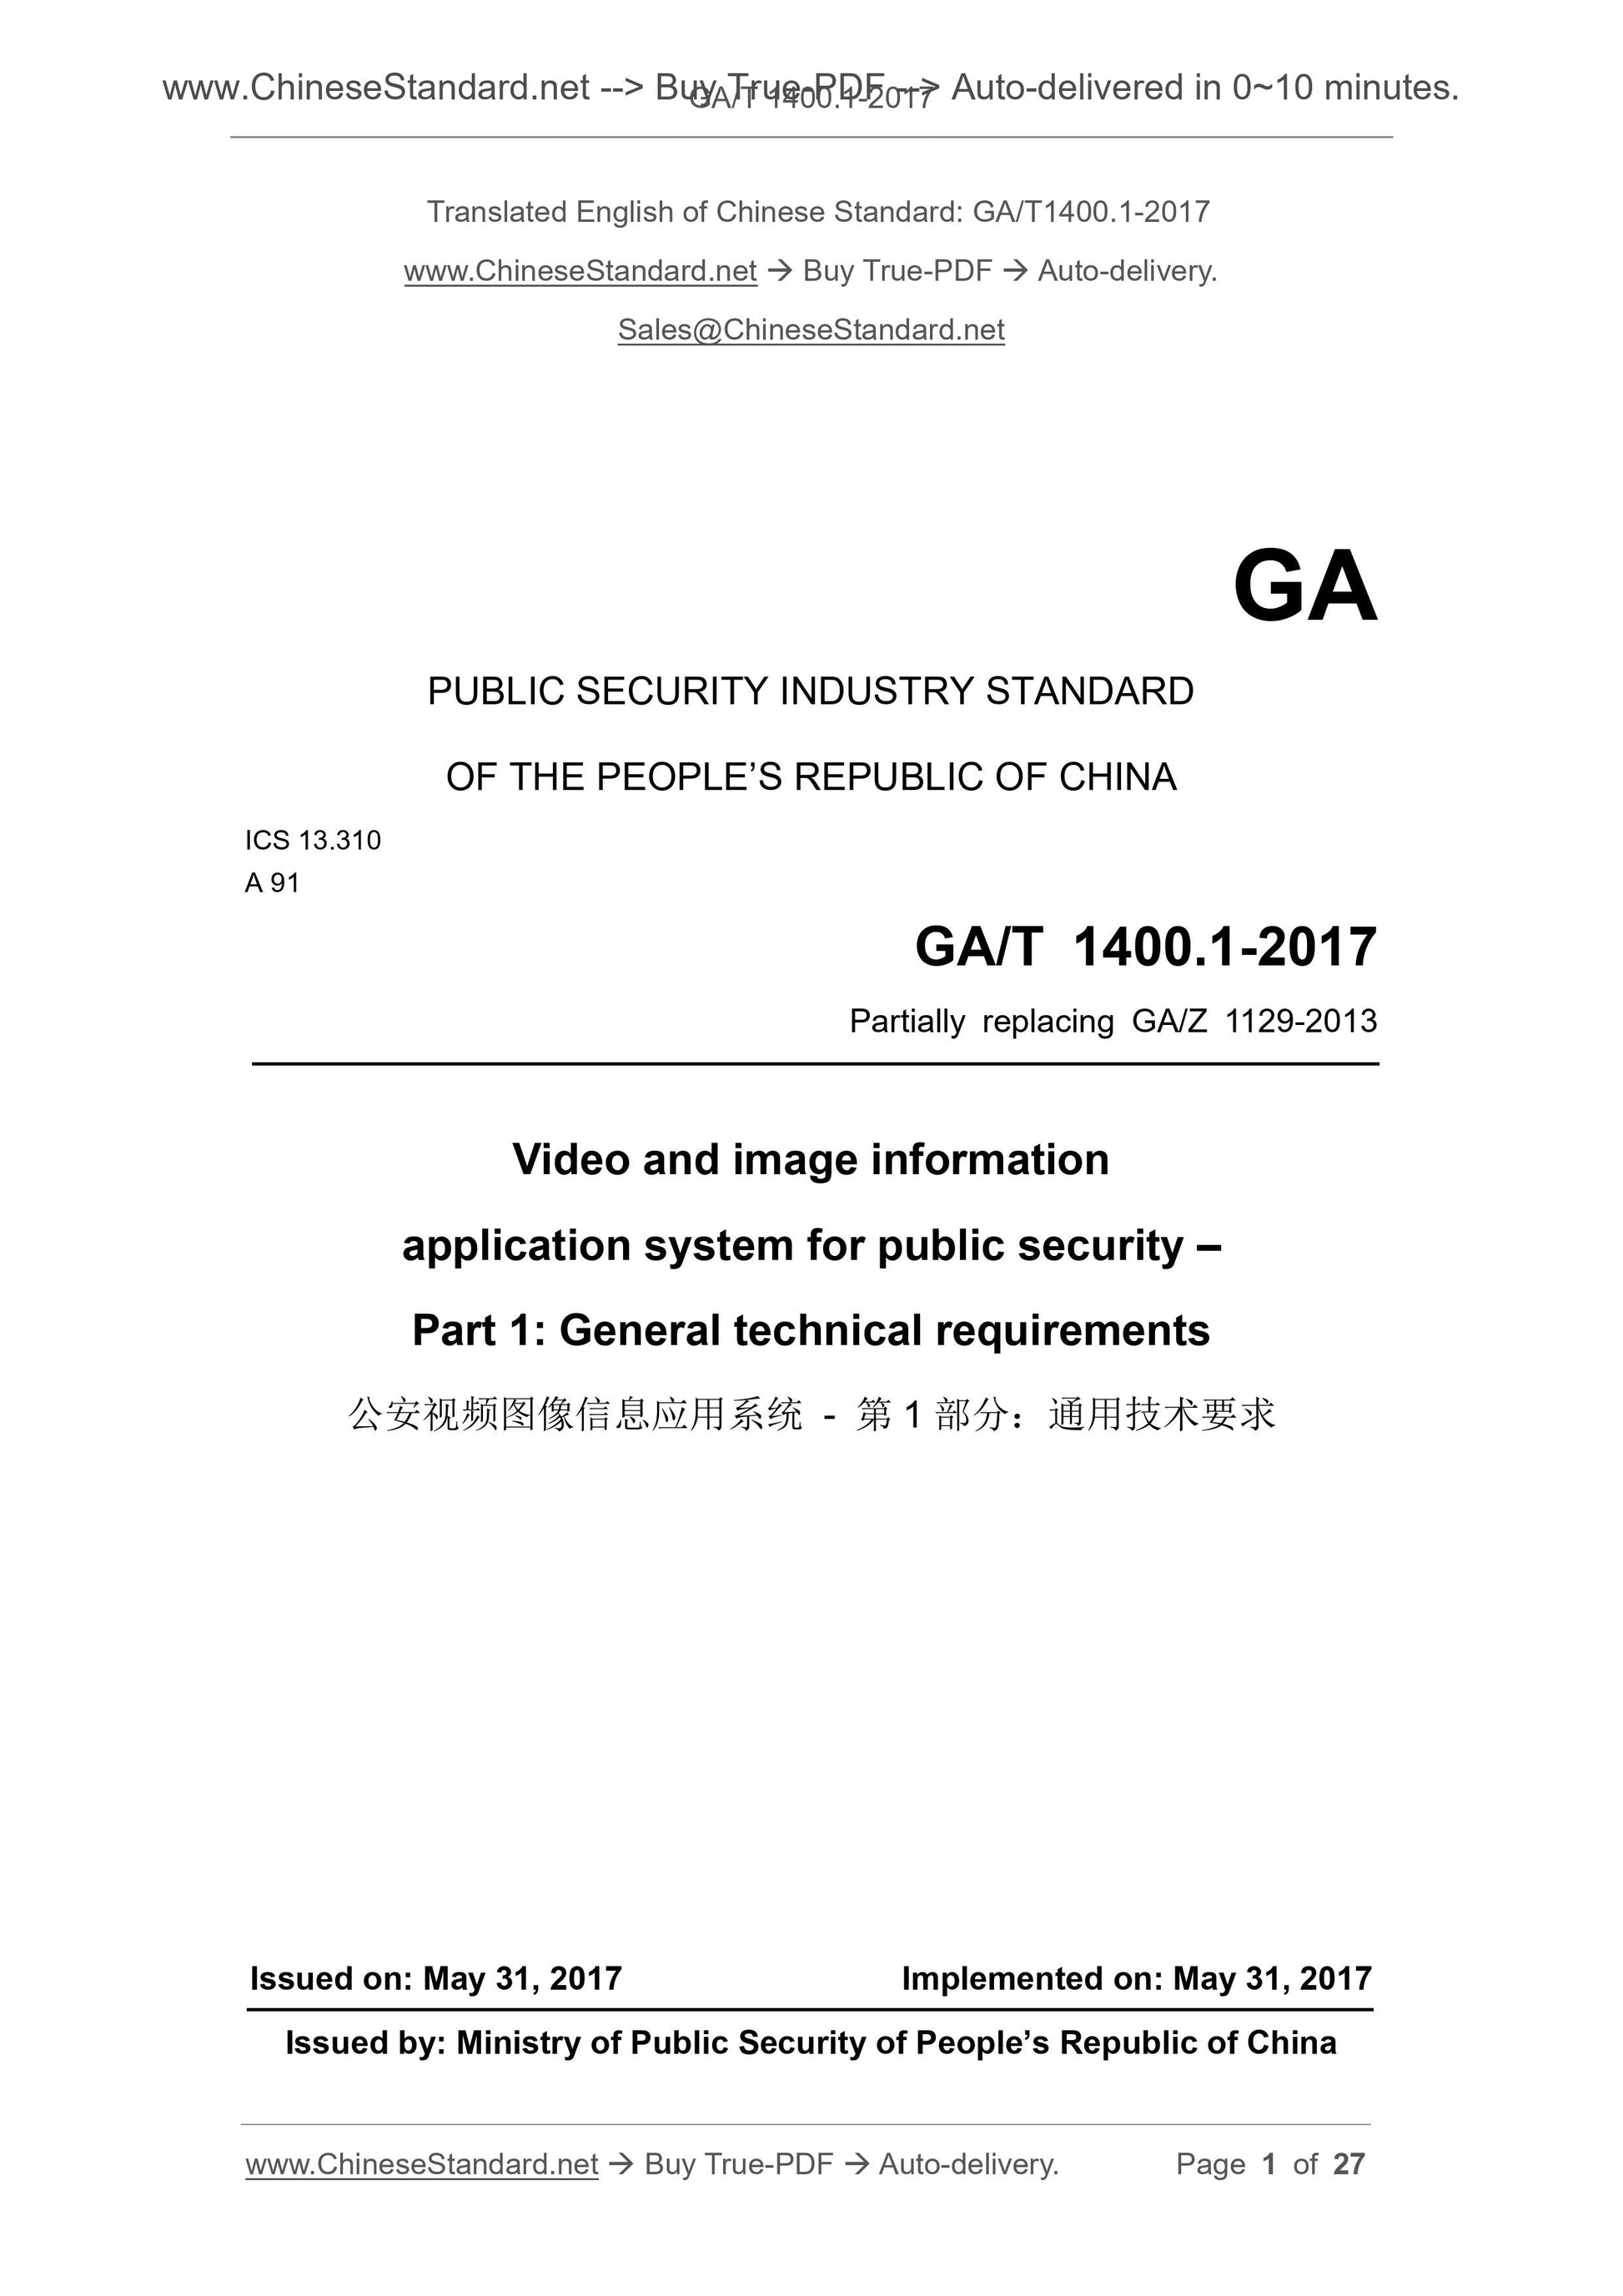 GA/T 1400.1-2017 Page 1